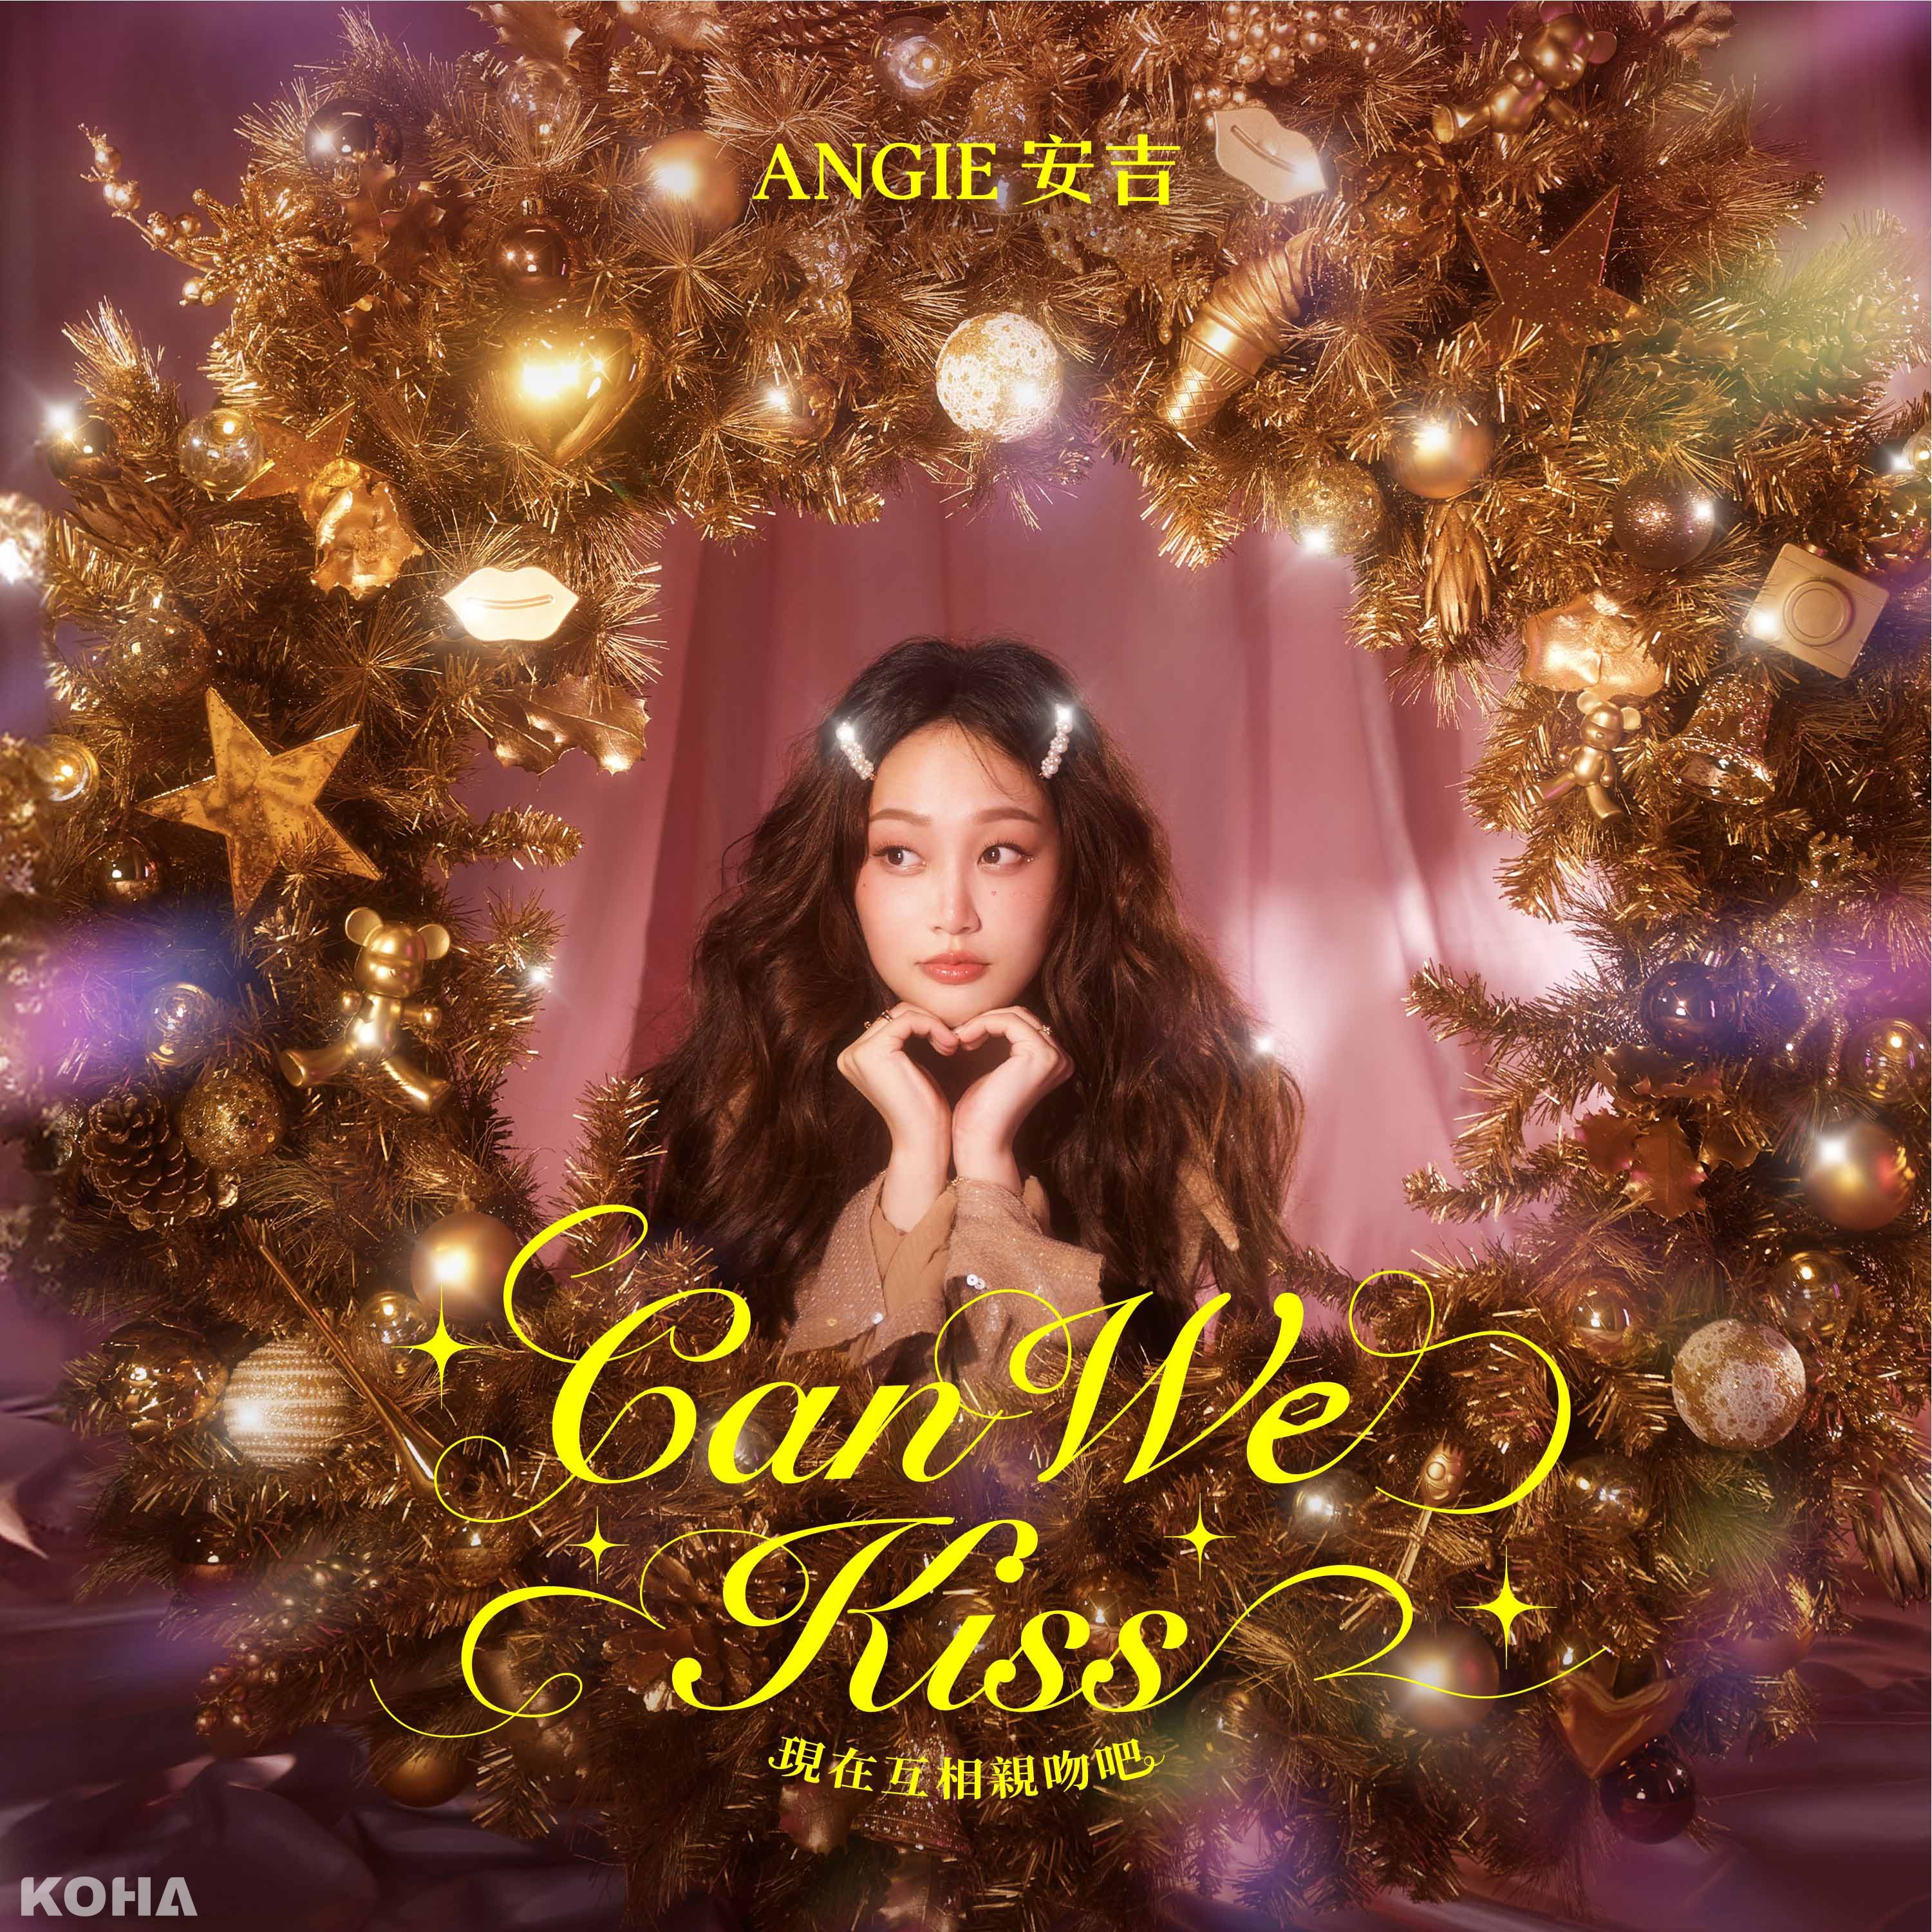 ANGIE安吉耶誕單曲〈現在互相親吻吧 Can we Kiss？〉即將上架！輕甜創作女聲迎接浪漫耶誕氛圍